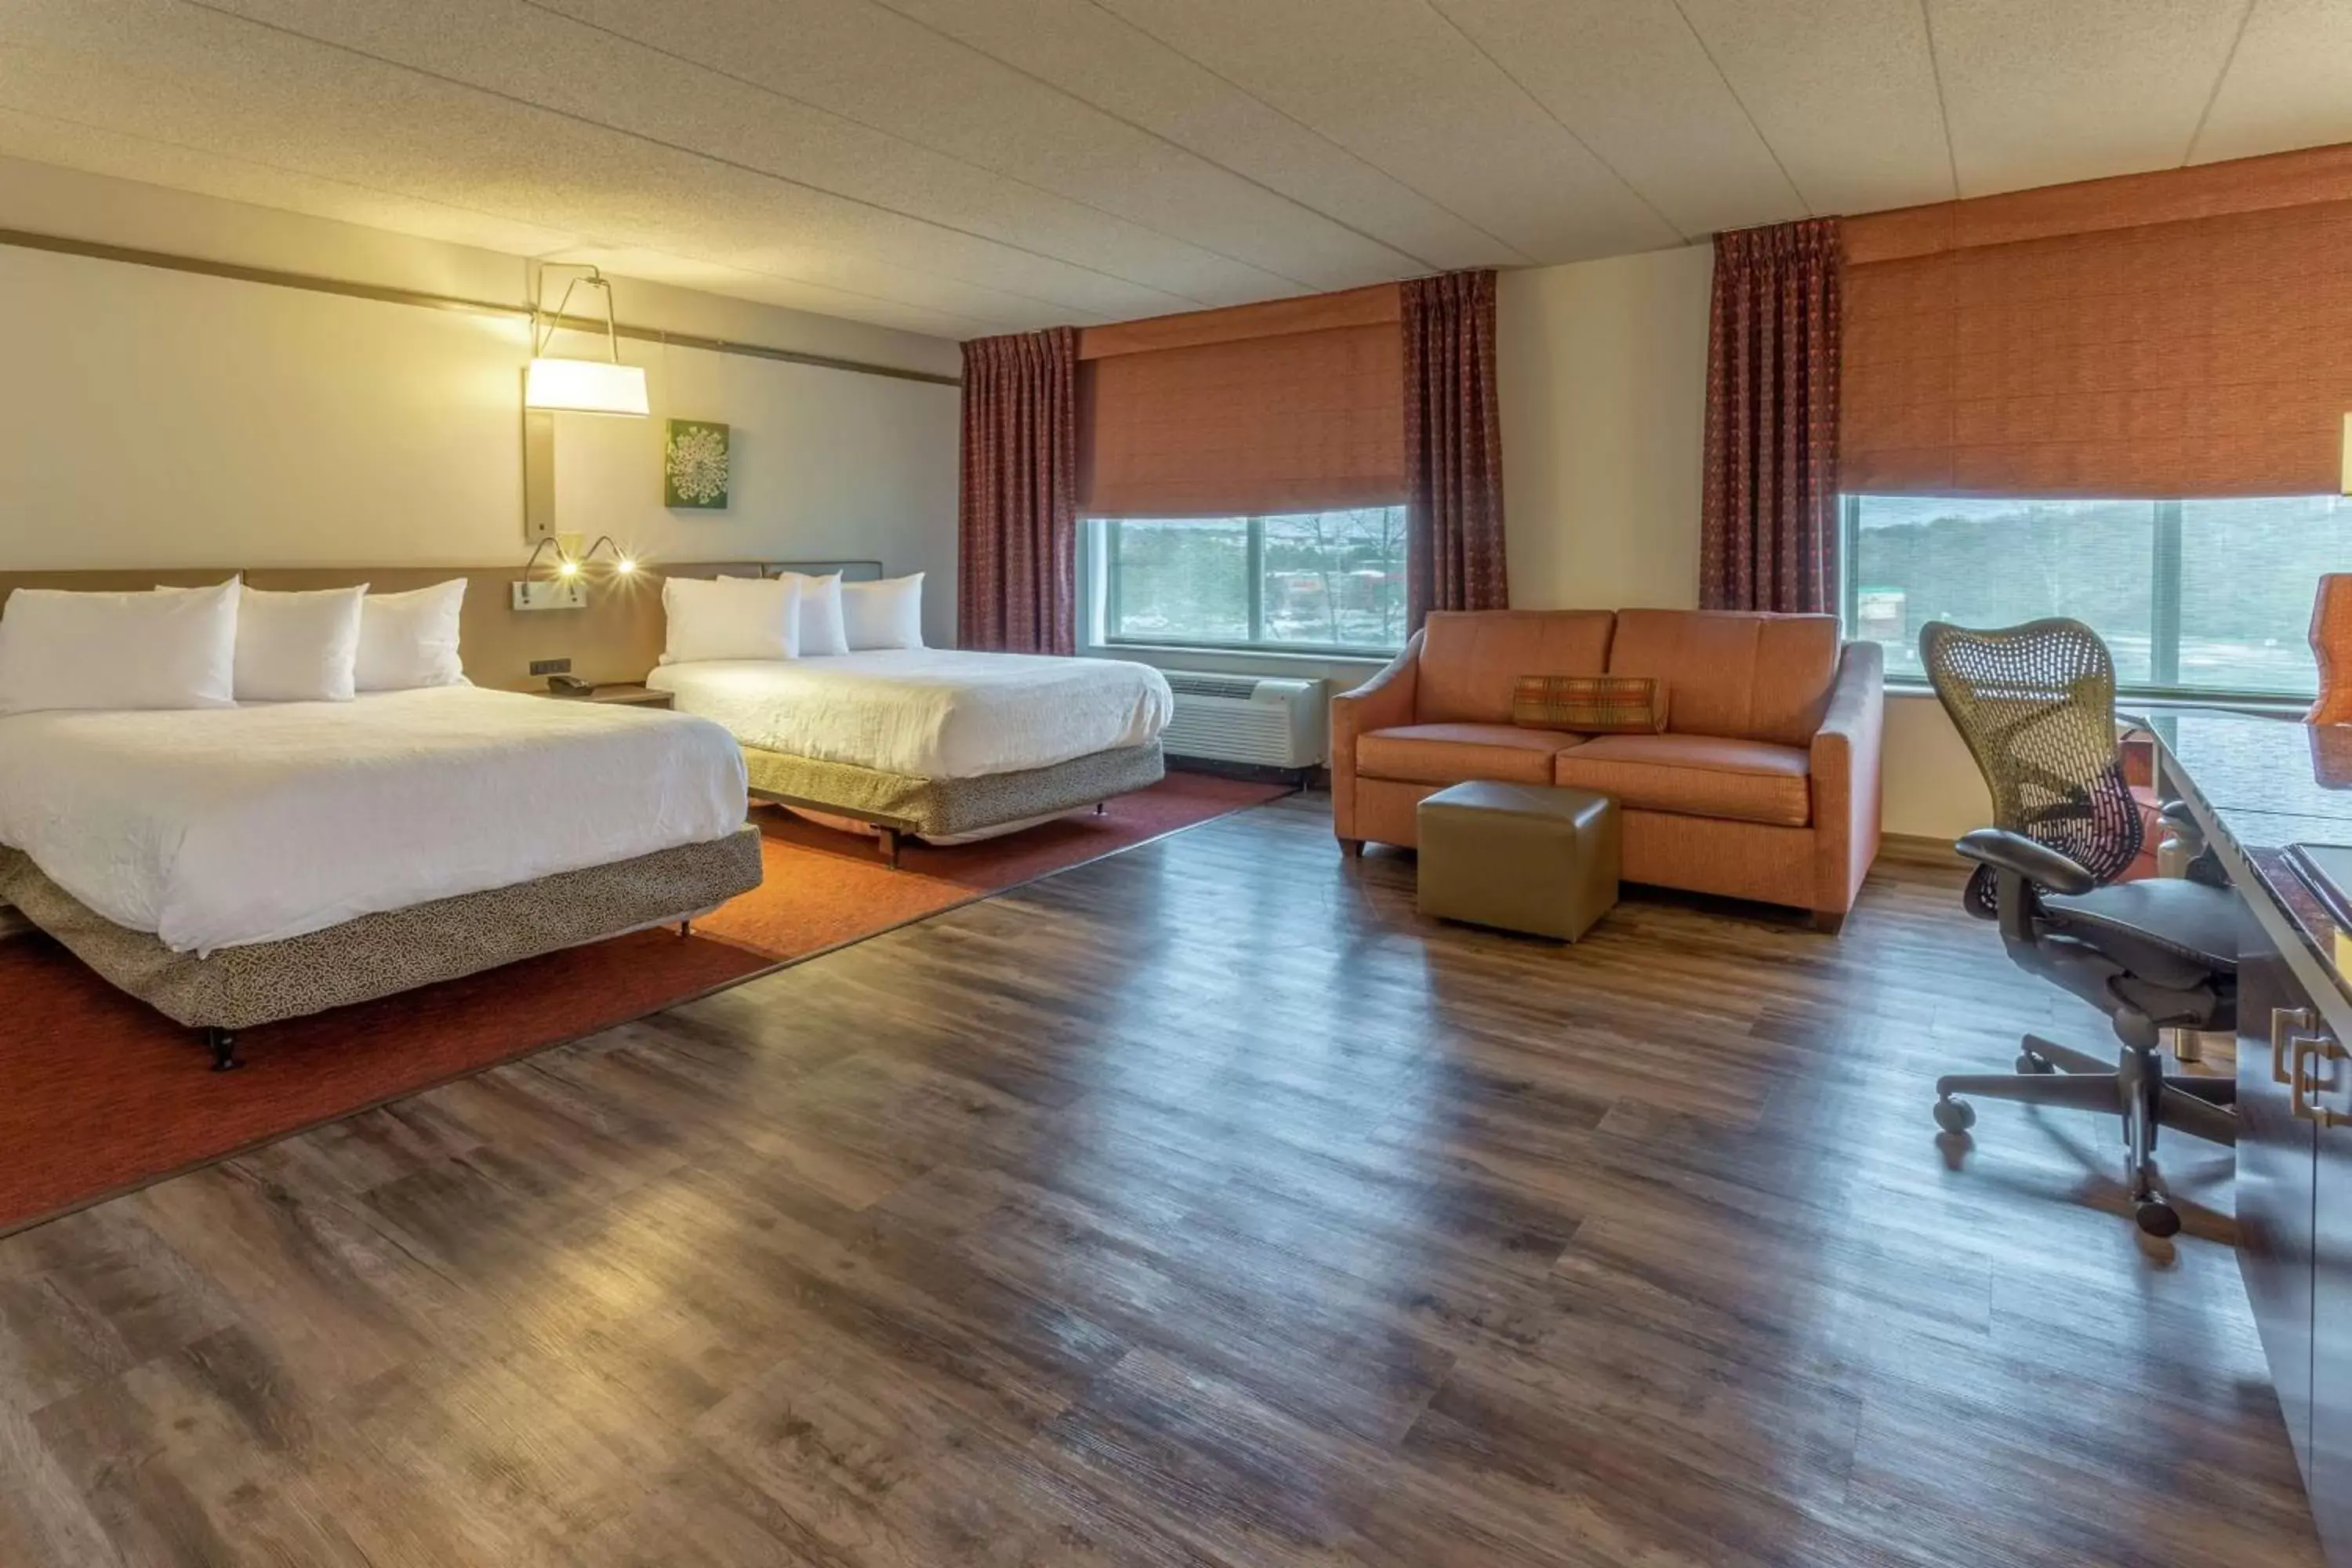 Bedroom in Hilton Garden Inn Owings Mills